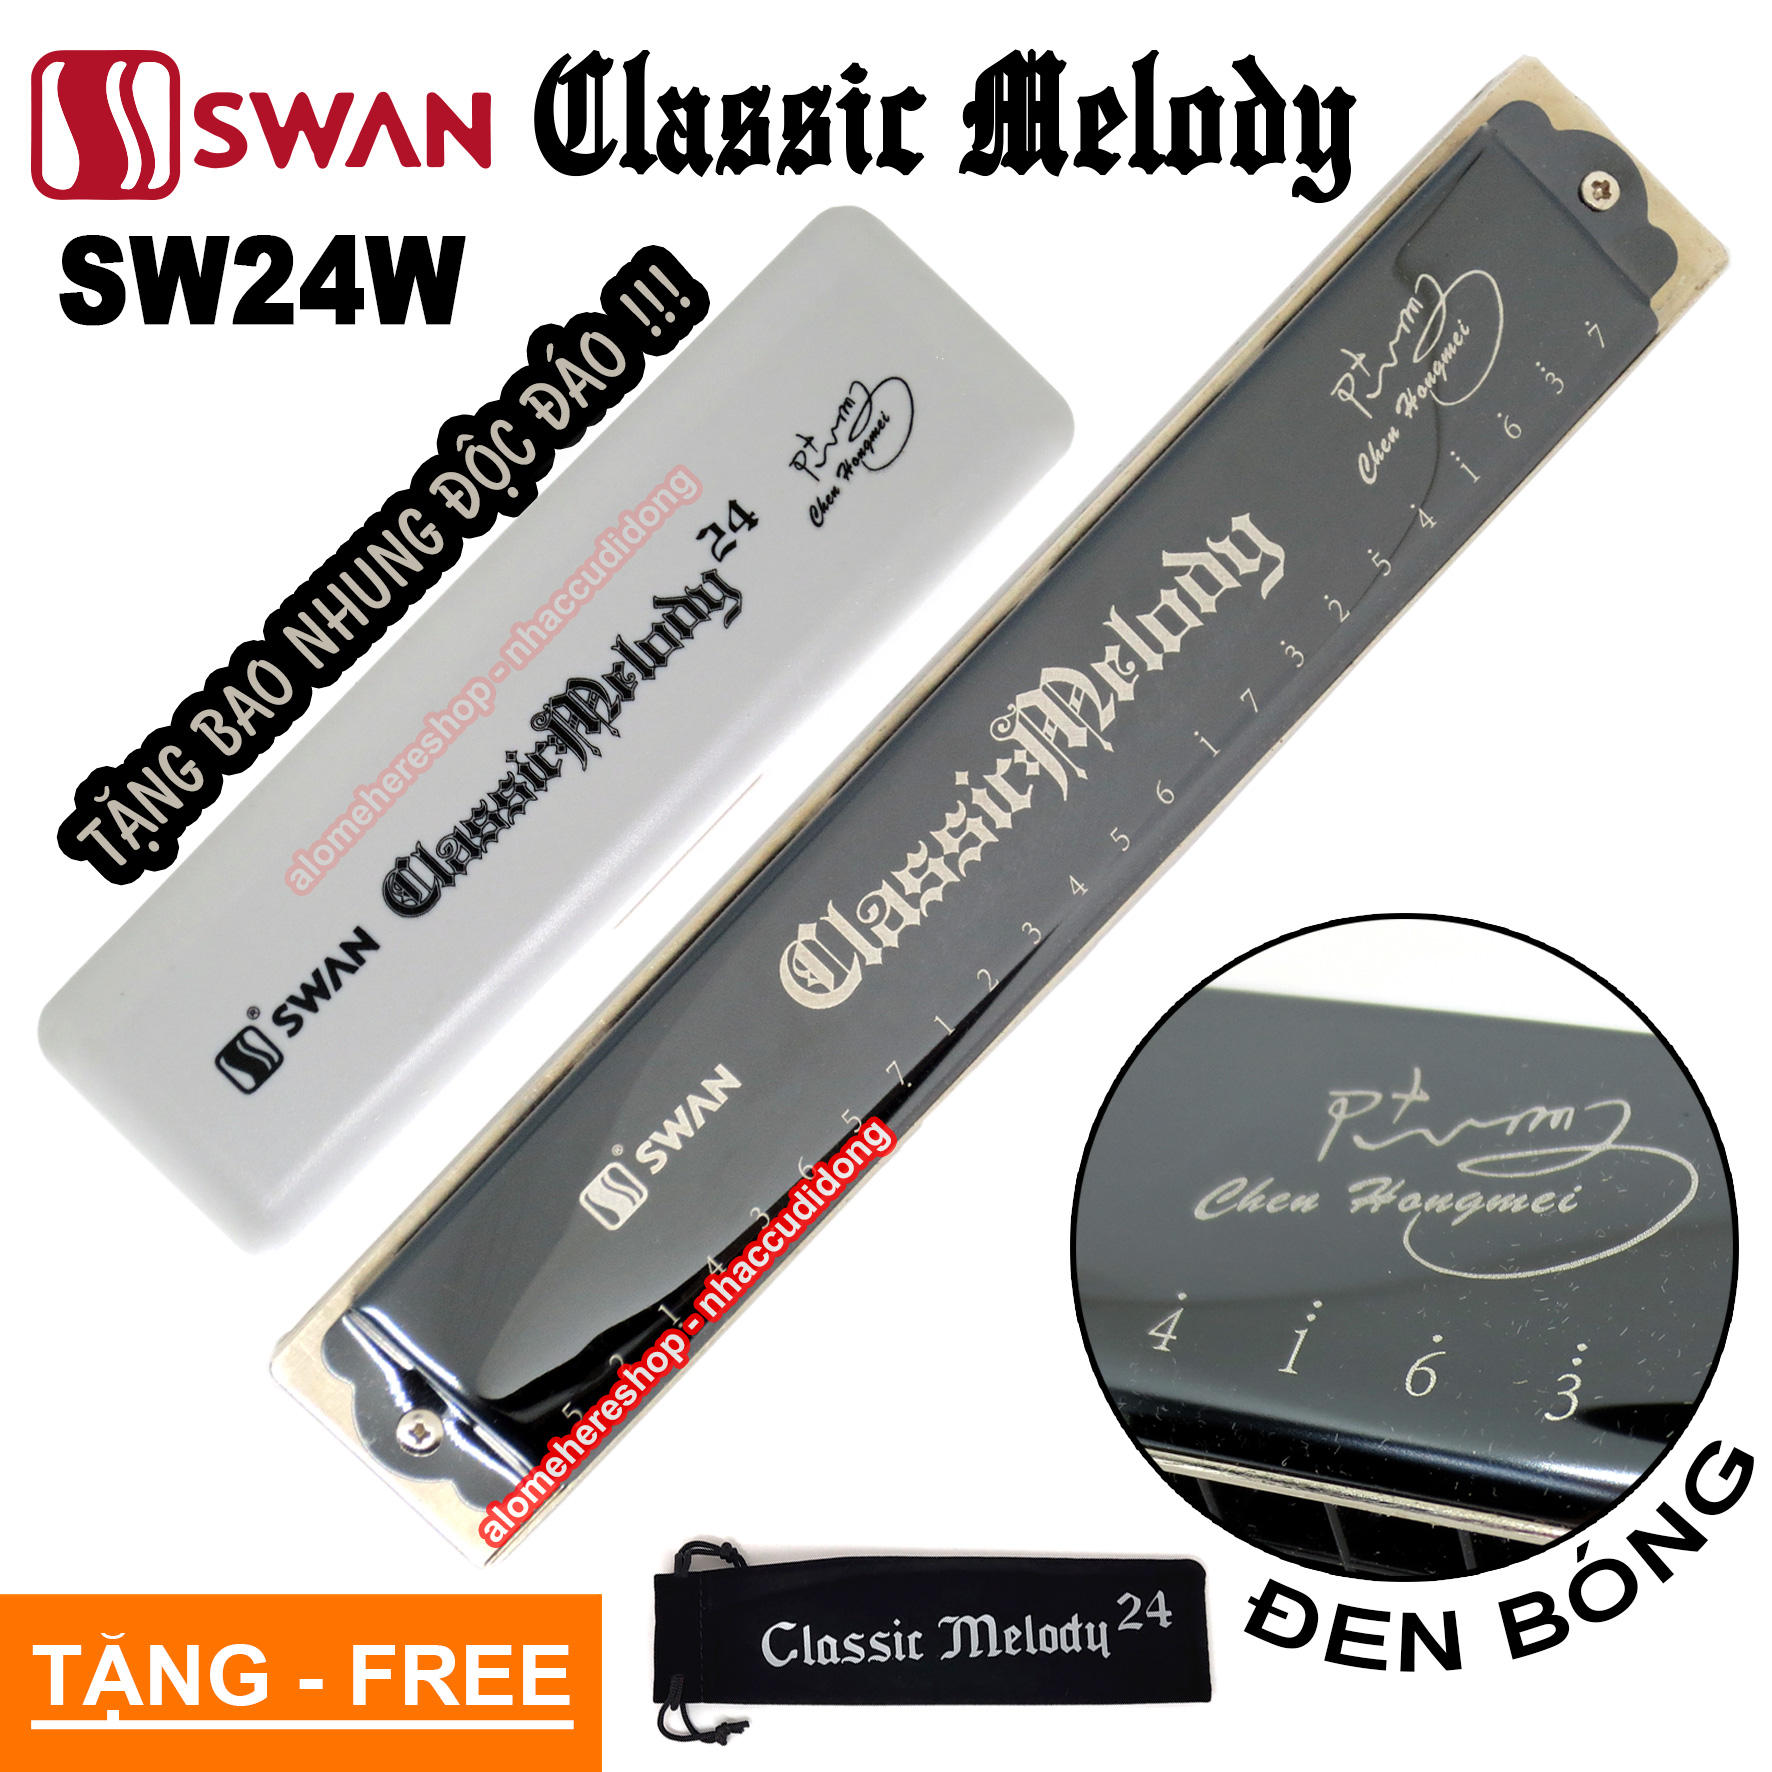 Kèn Harmonica Tremolo Swan Classic Melody SW24W Cao Cấp Đen Bóng Key C